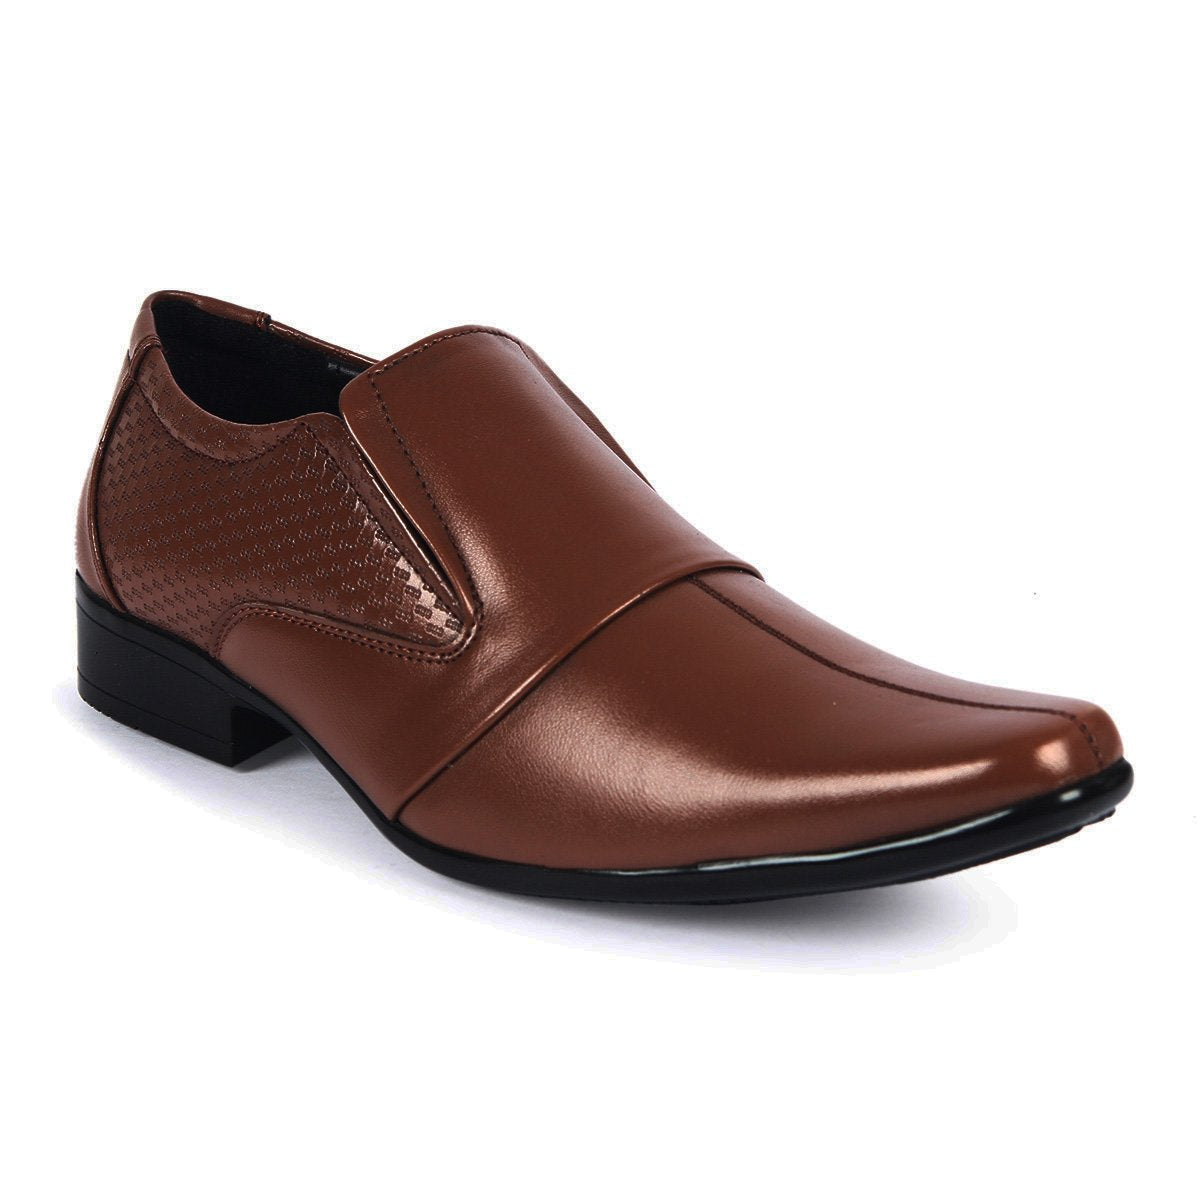 Zays Leather Formal Shoe For Men (Dark Brown) - ZAYSFS43